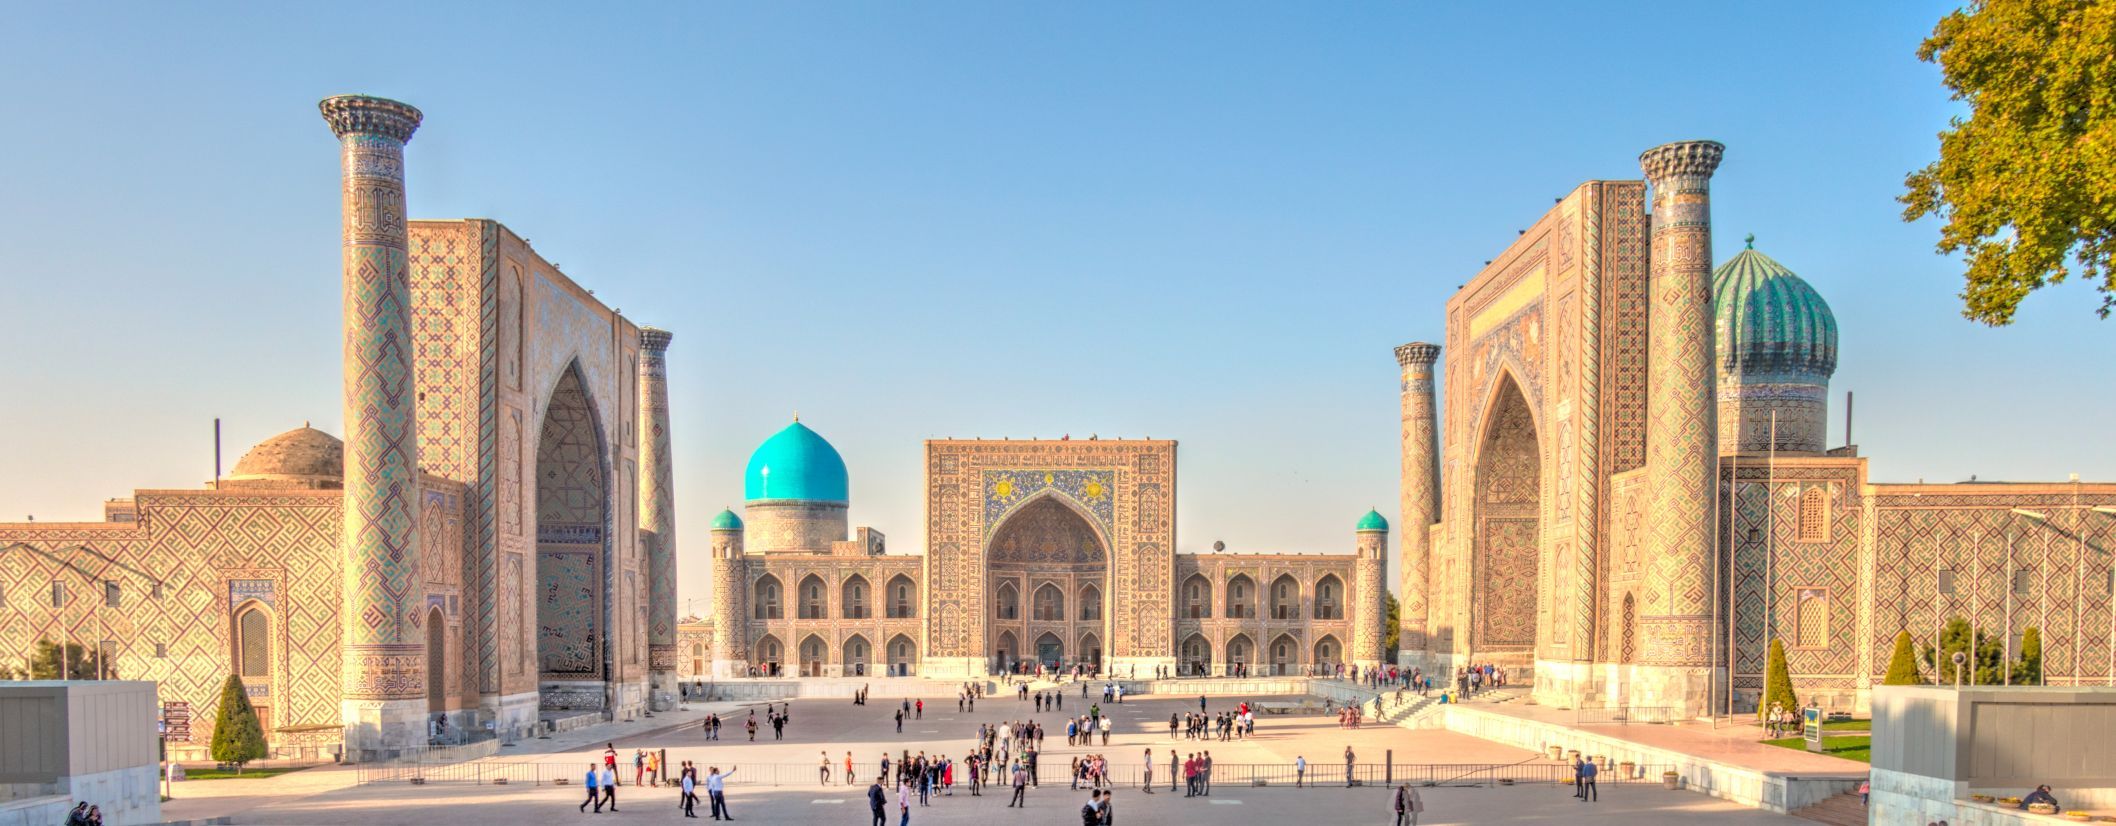  Samarkand-Registan-Platz.jpg 